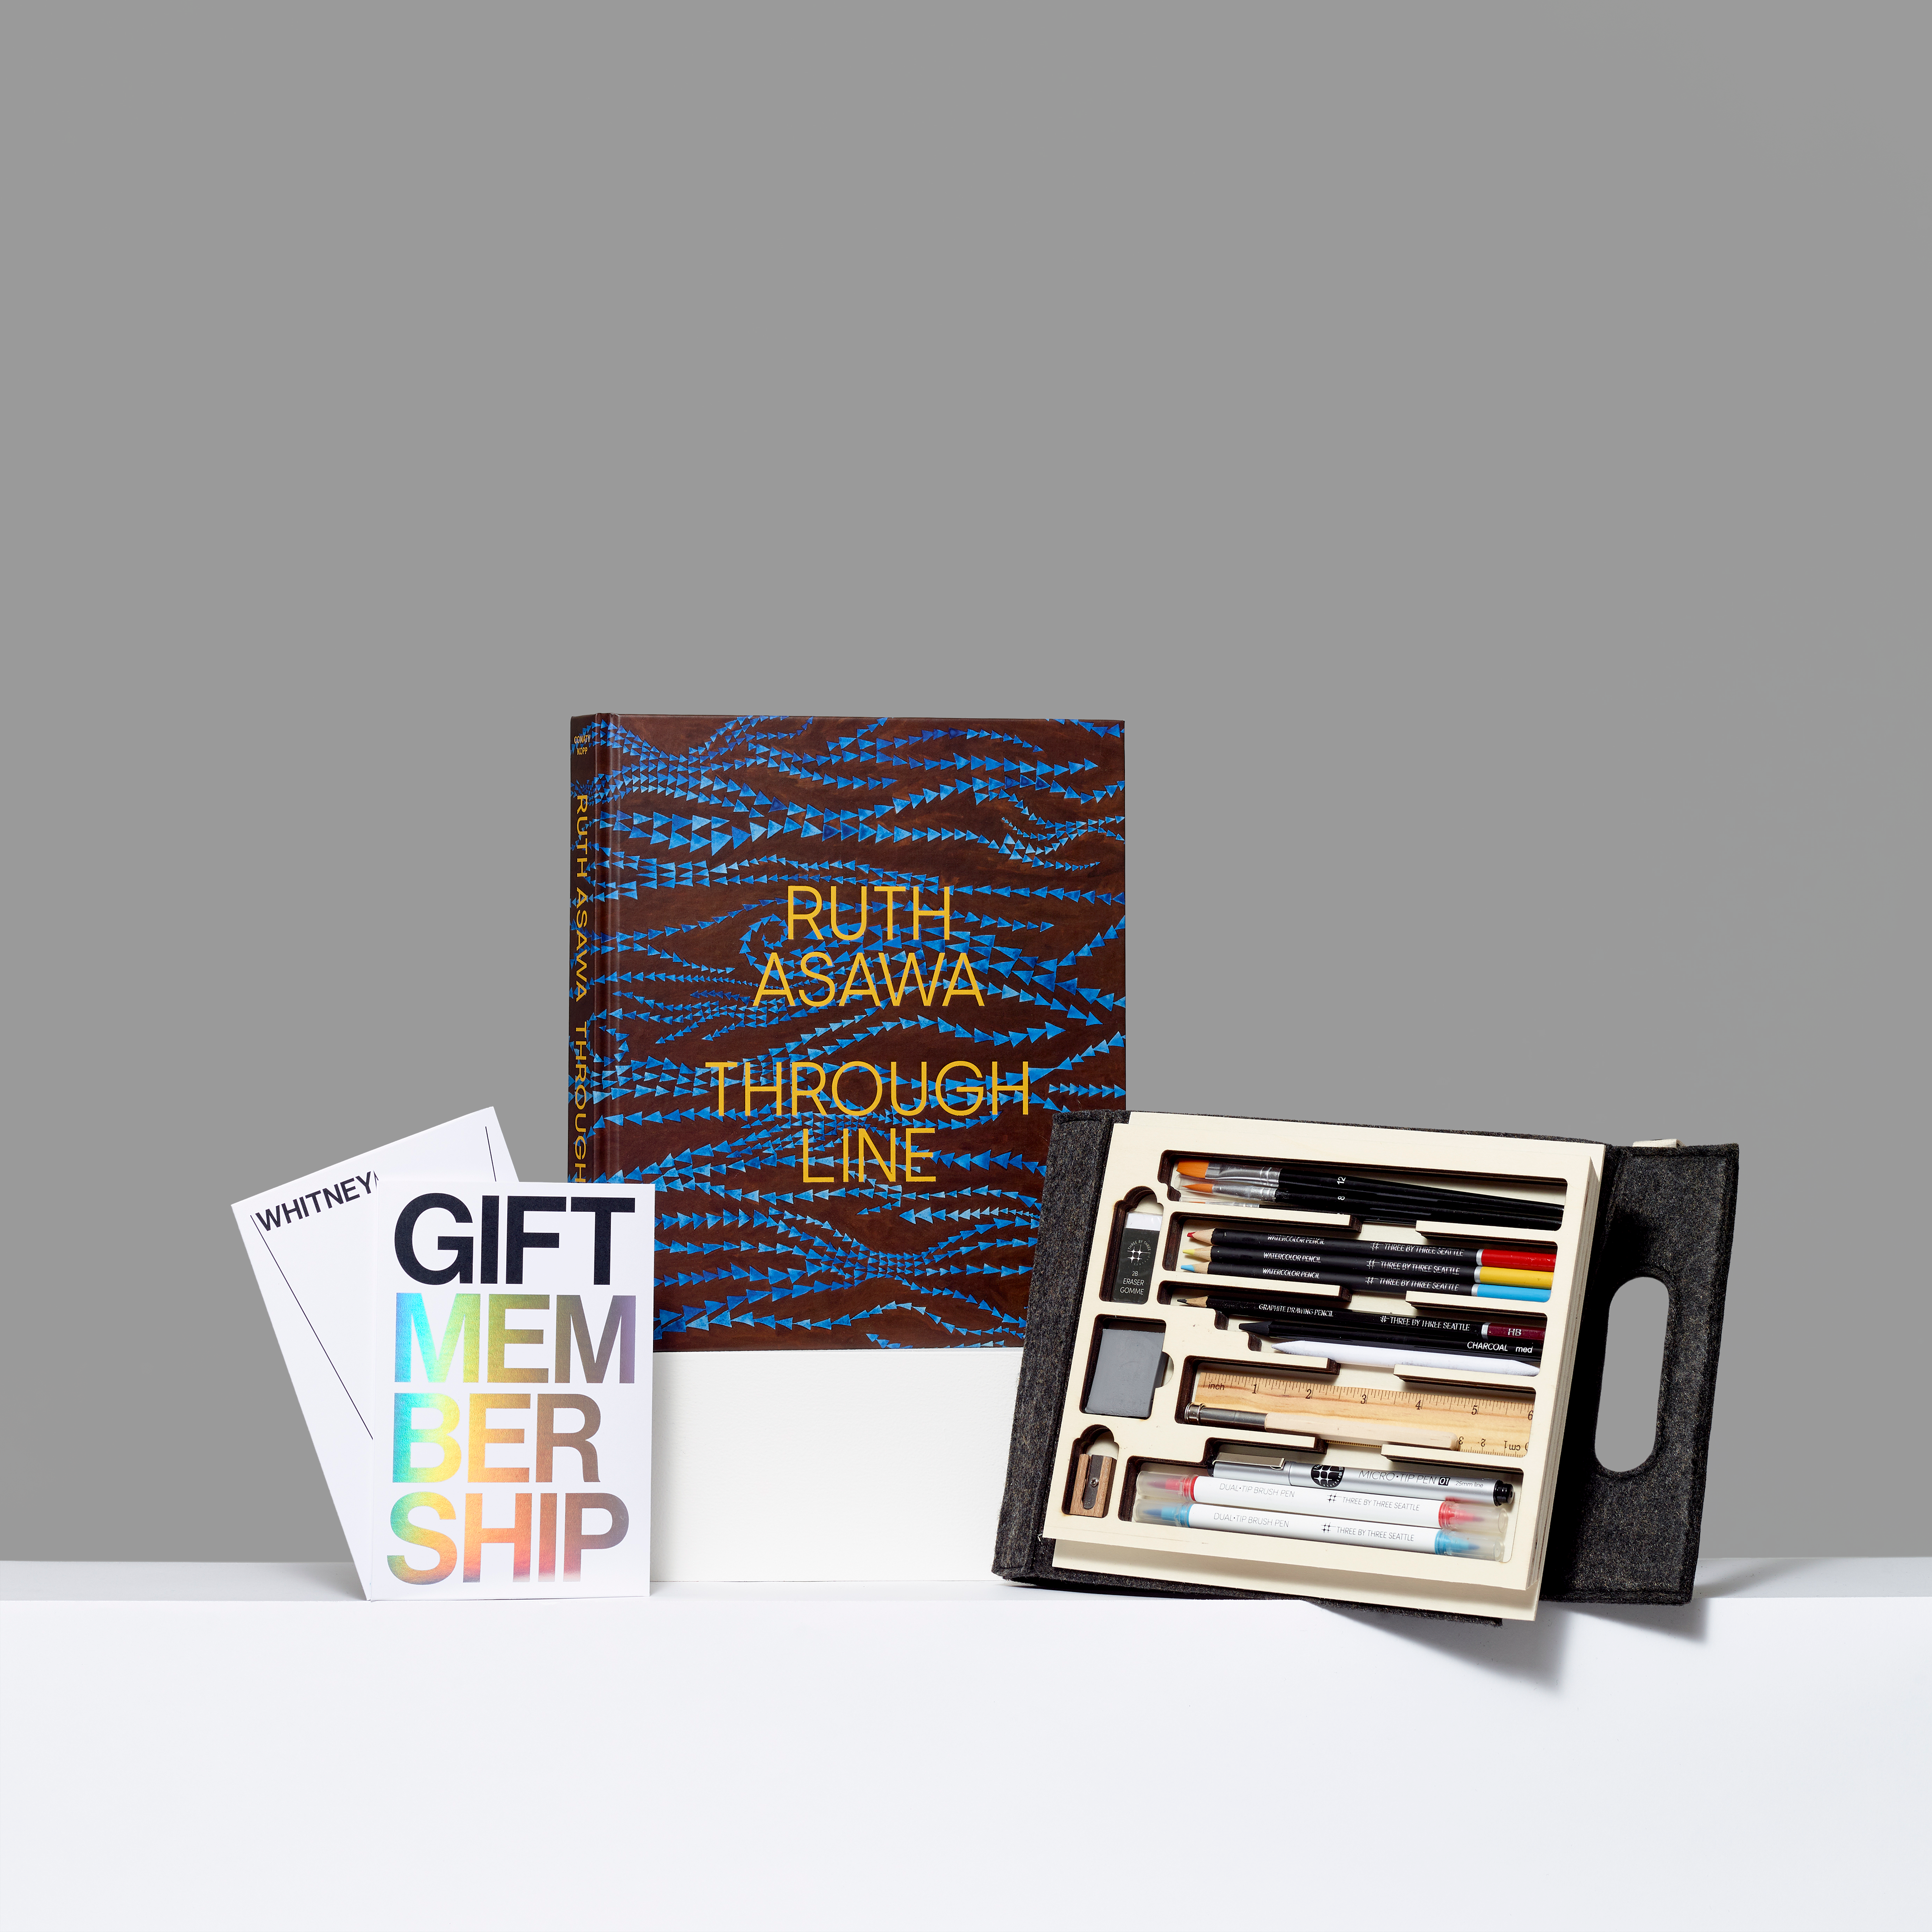 Membership bundle featuring Gift Membership, Ruth Asawa Through Line Exhibition Catalogue, jotblock portable studio essentials